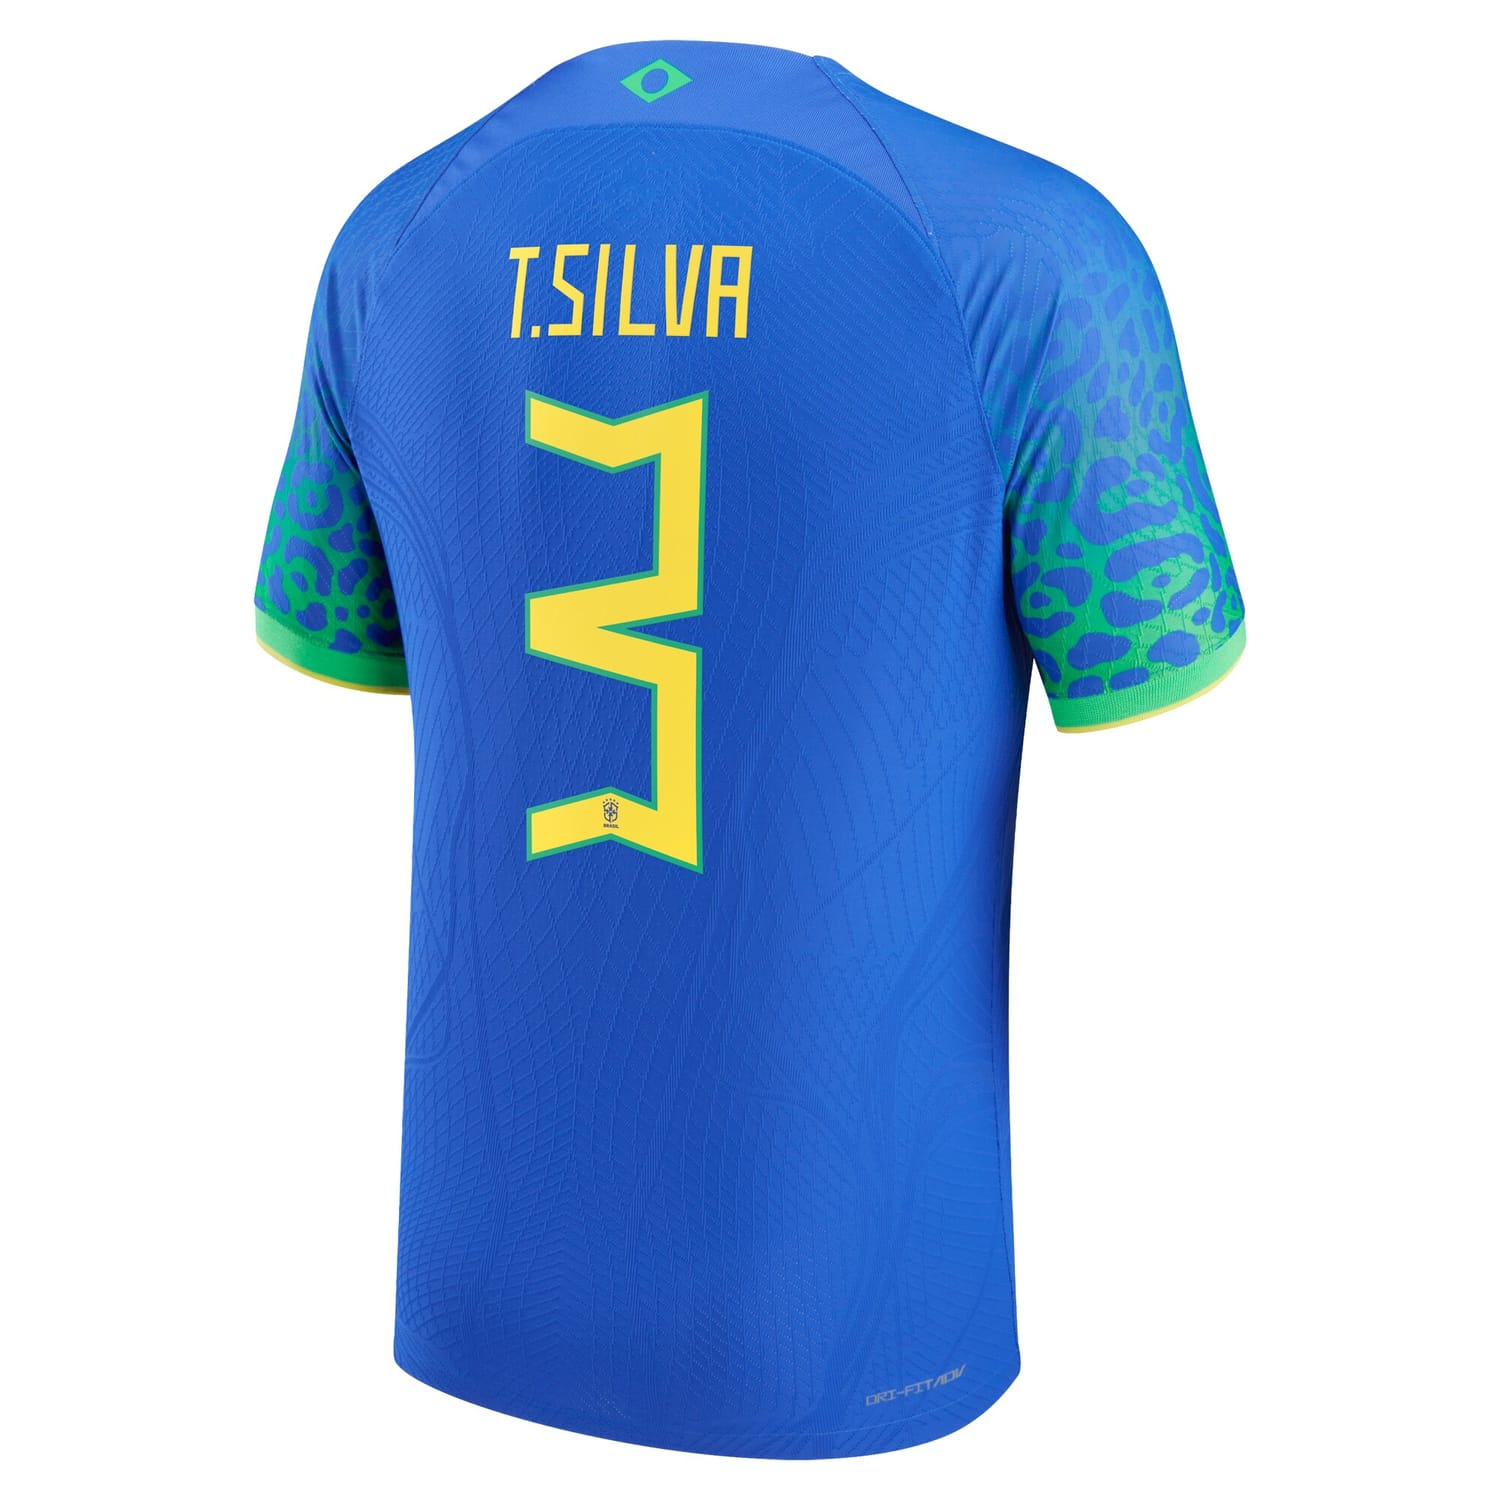 Brazil National Team Away Authentic Jersey Shirt Blue 2022-23 player Thiago Silva printing for Men